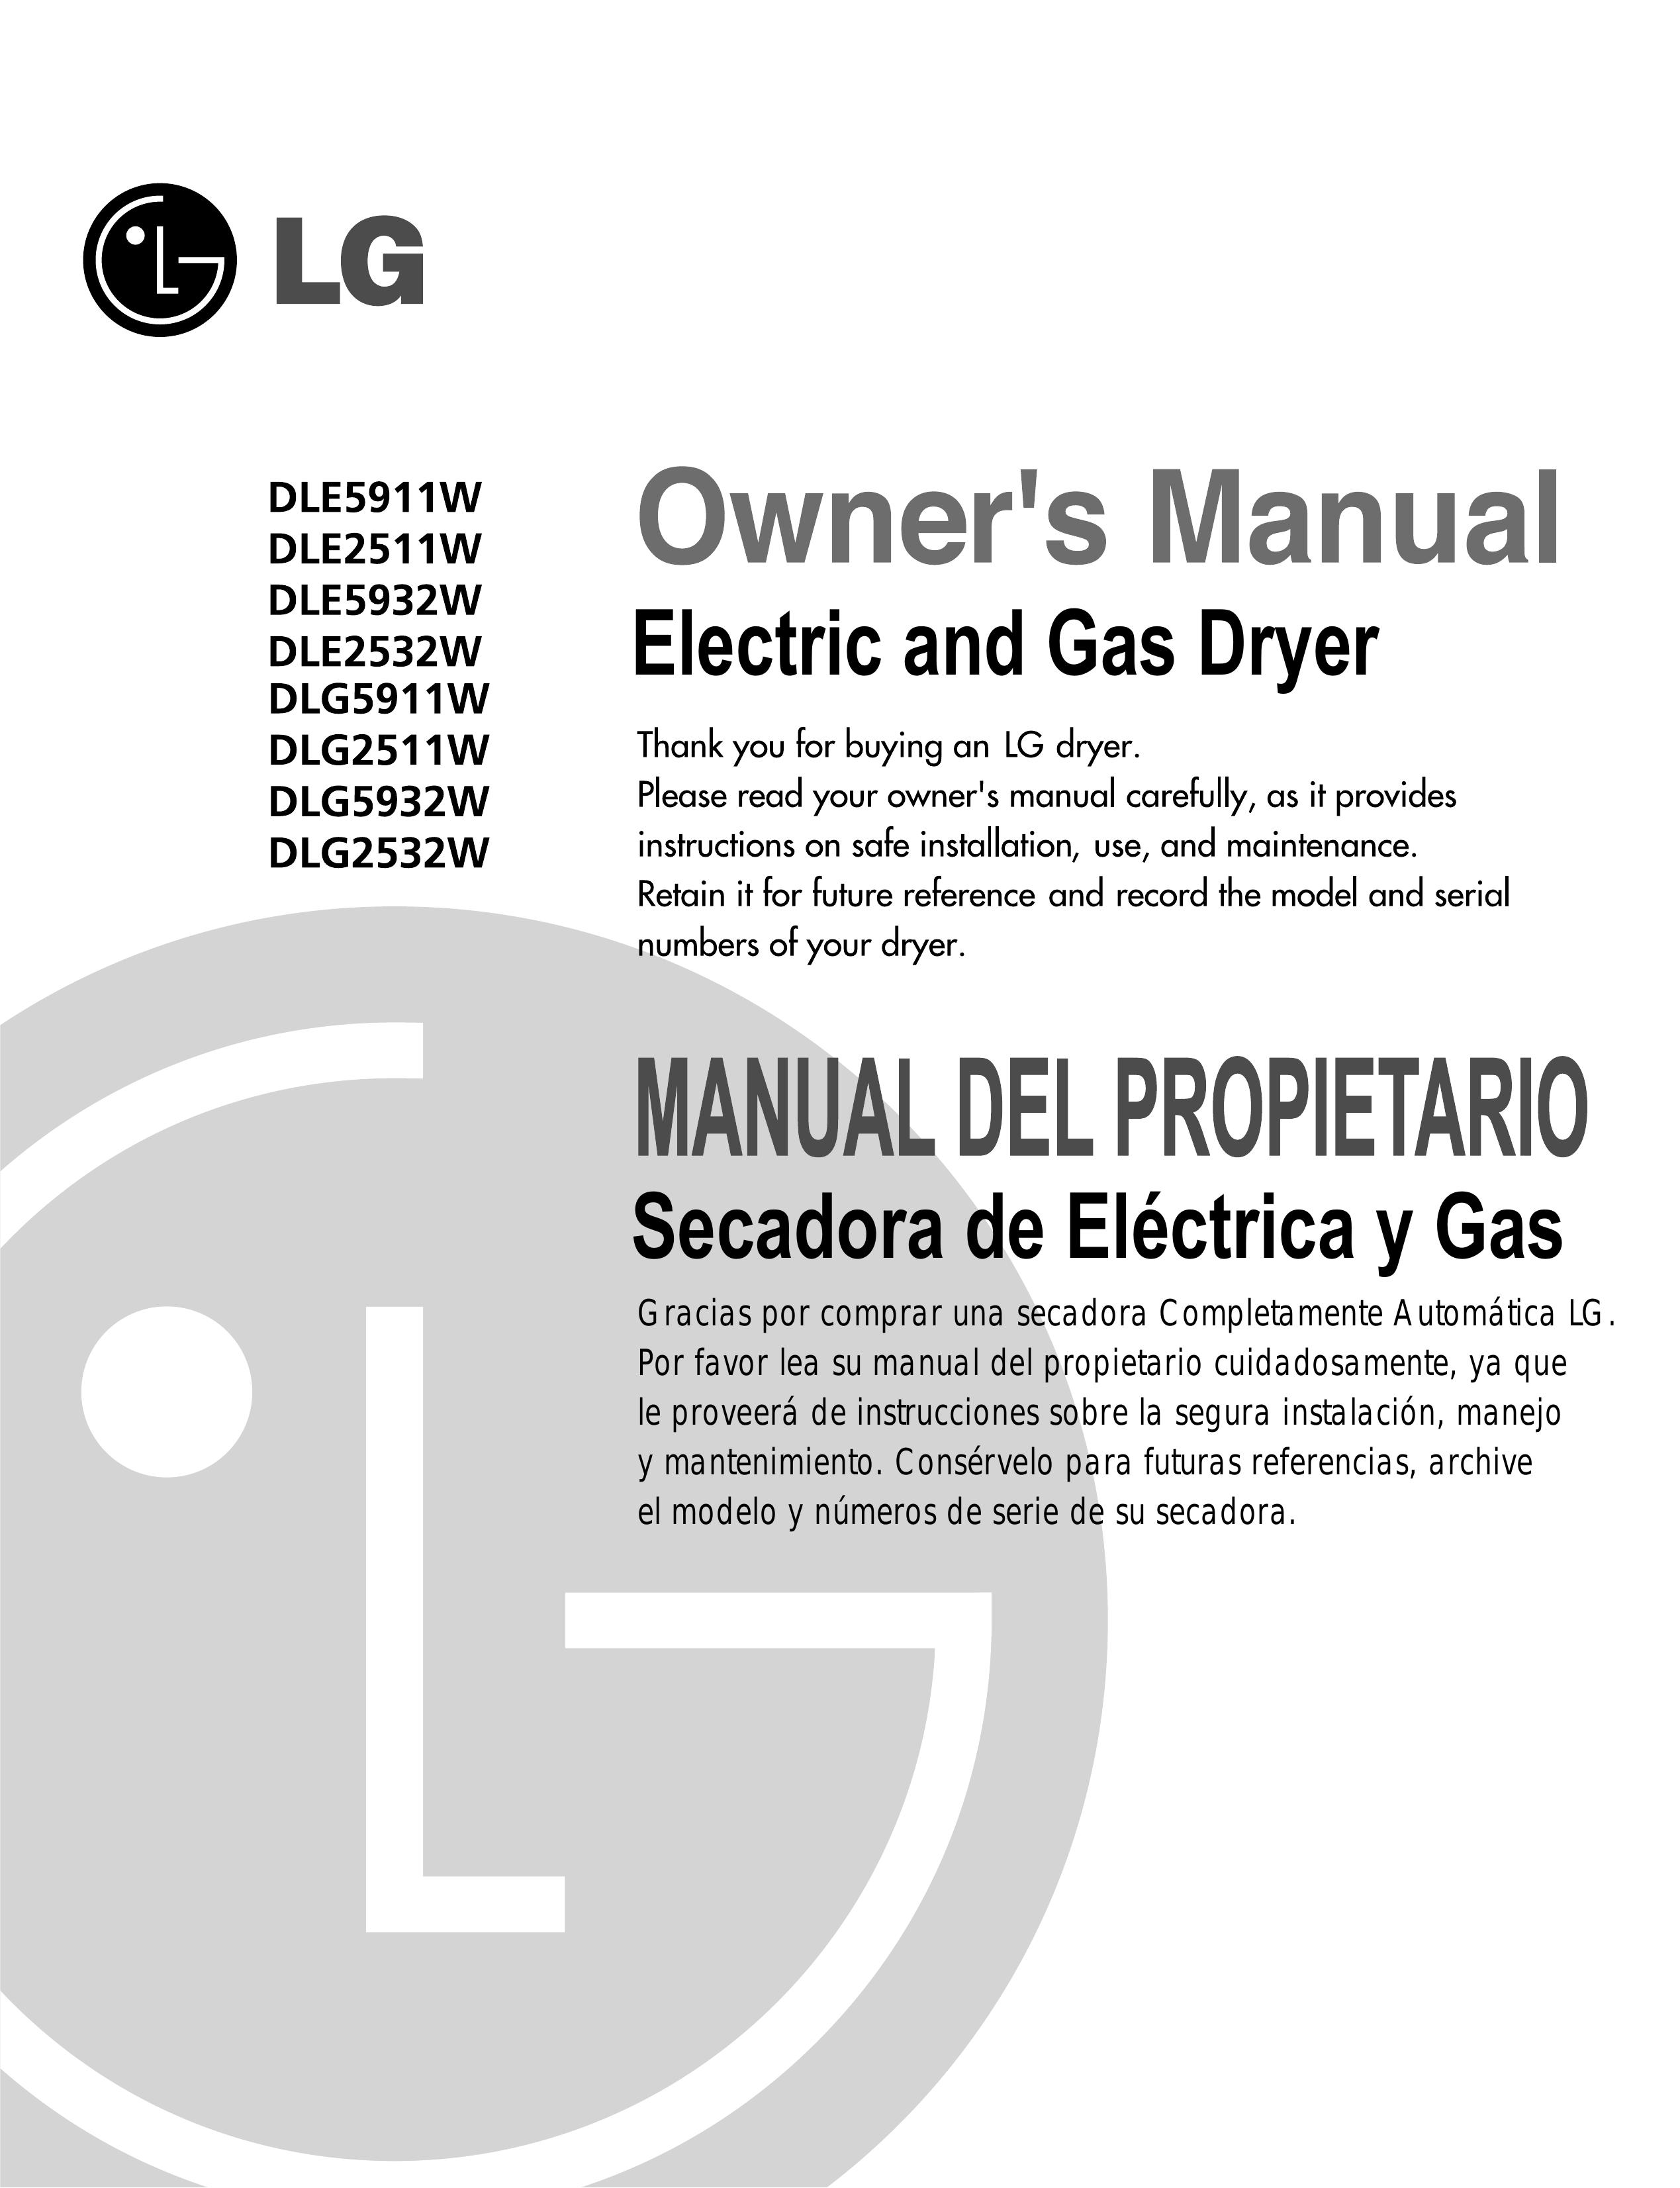 LG Electronics D2532W Clothes Dryer User Manual